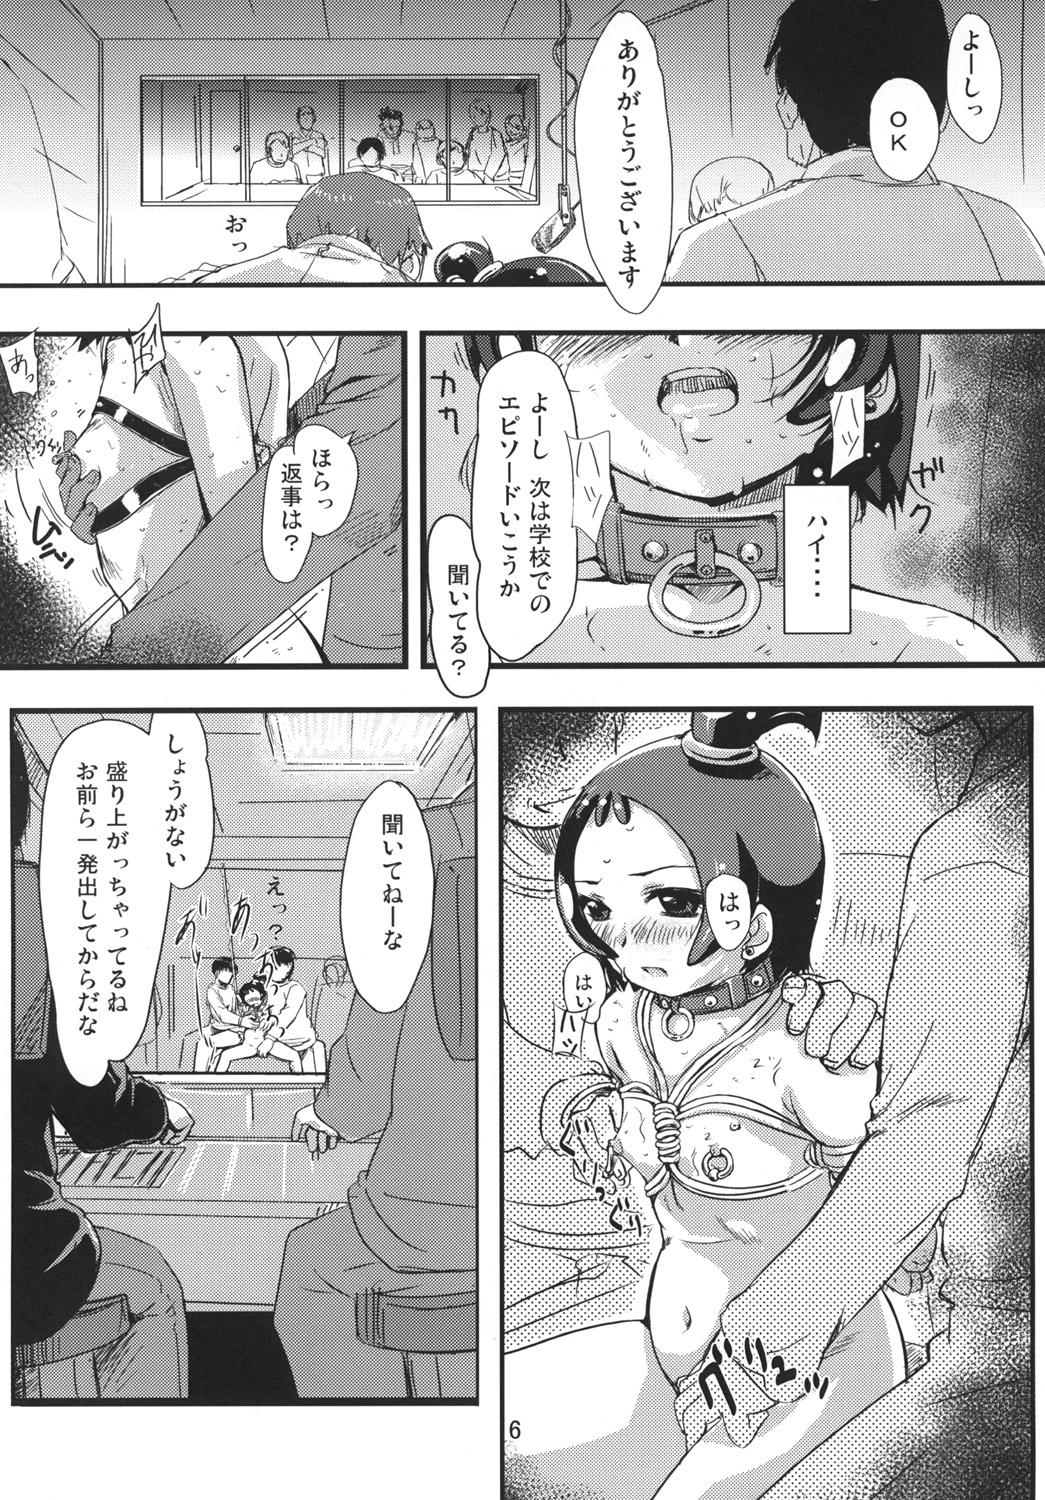 Face Fucking Onpu Zukushi 9 - Ojamajo doremi Prostitute - Page 5